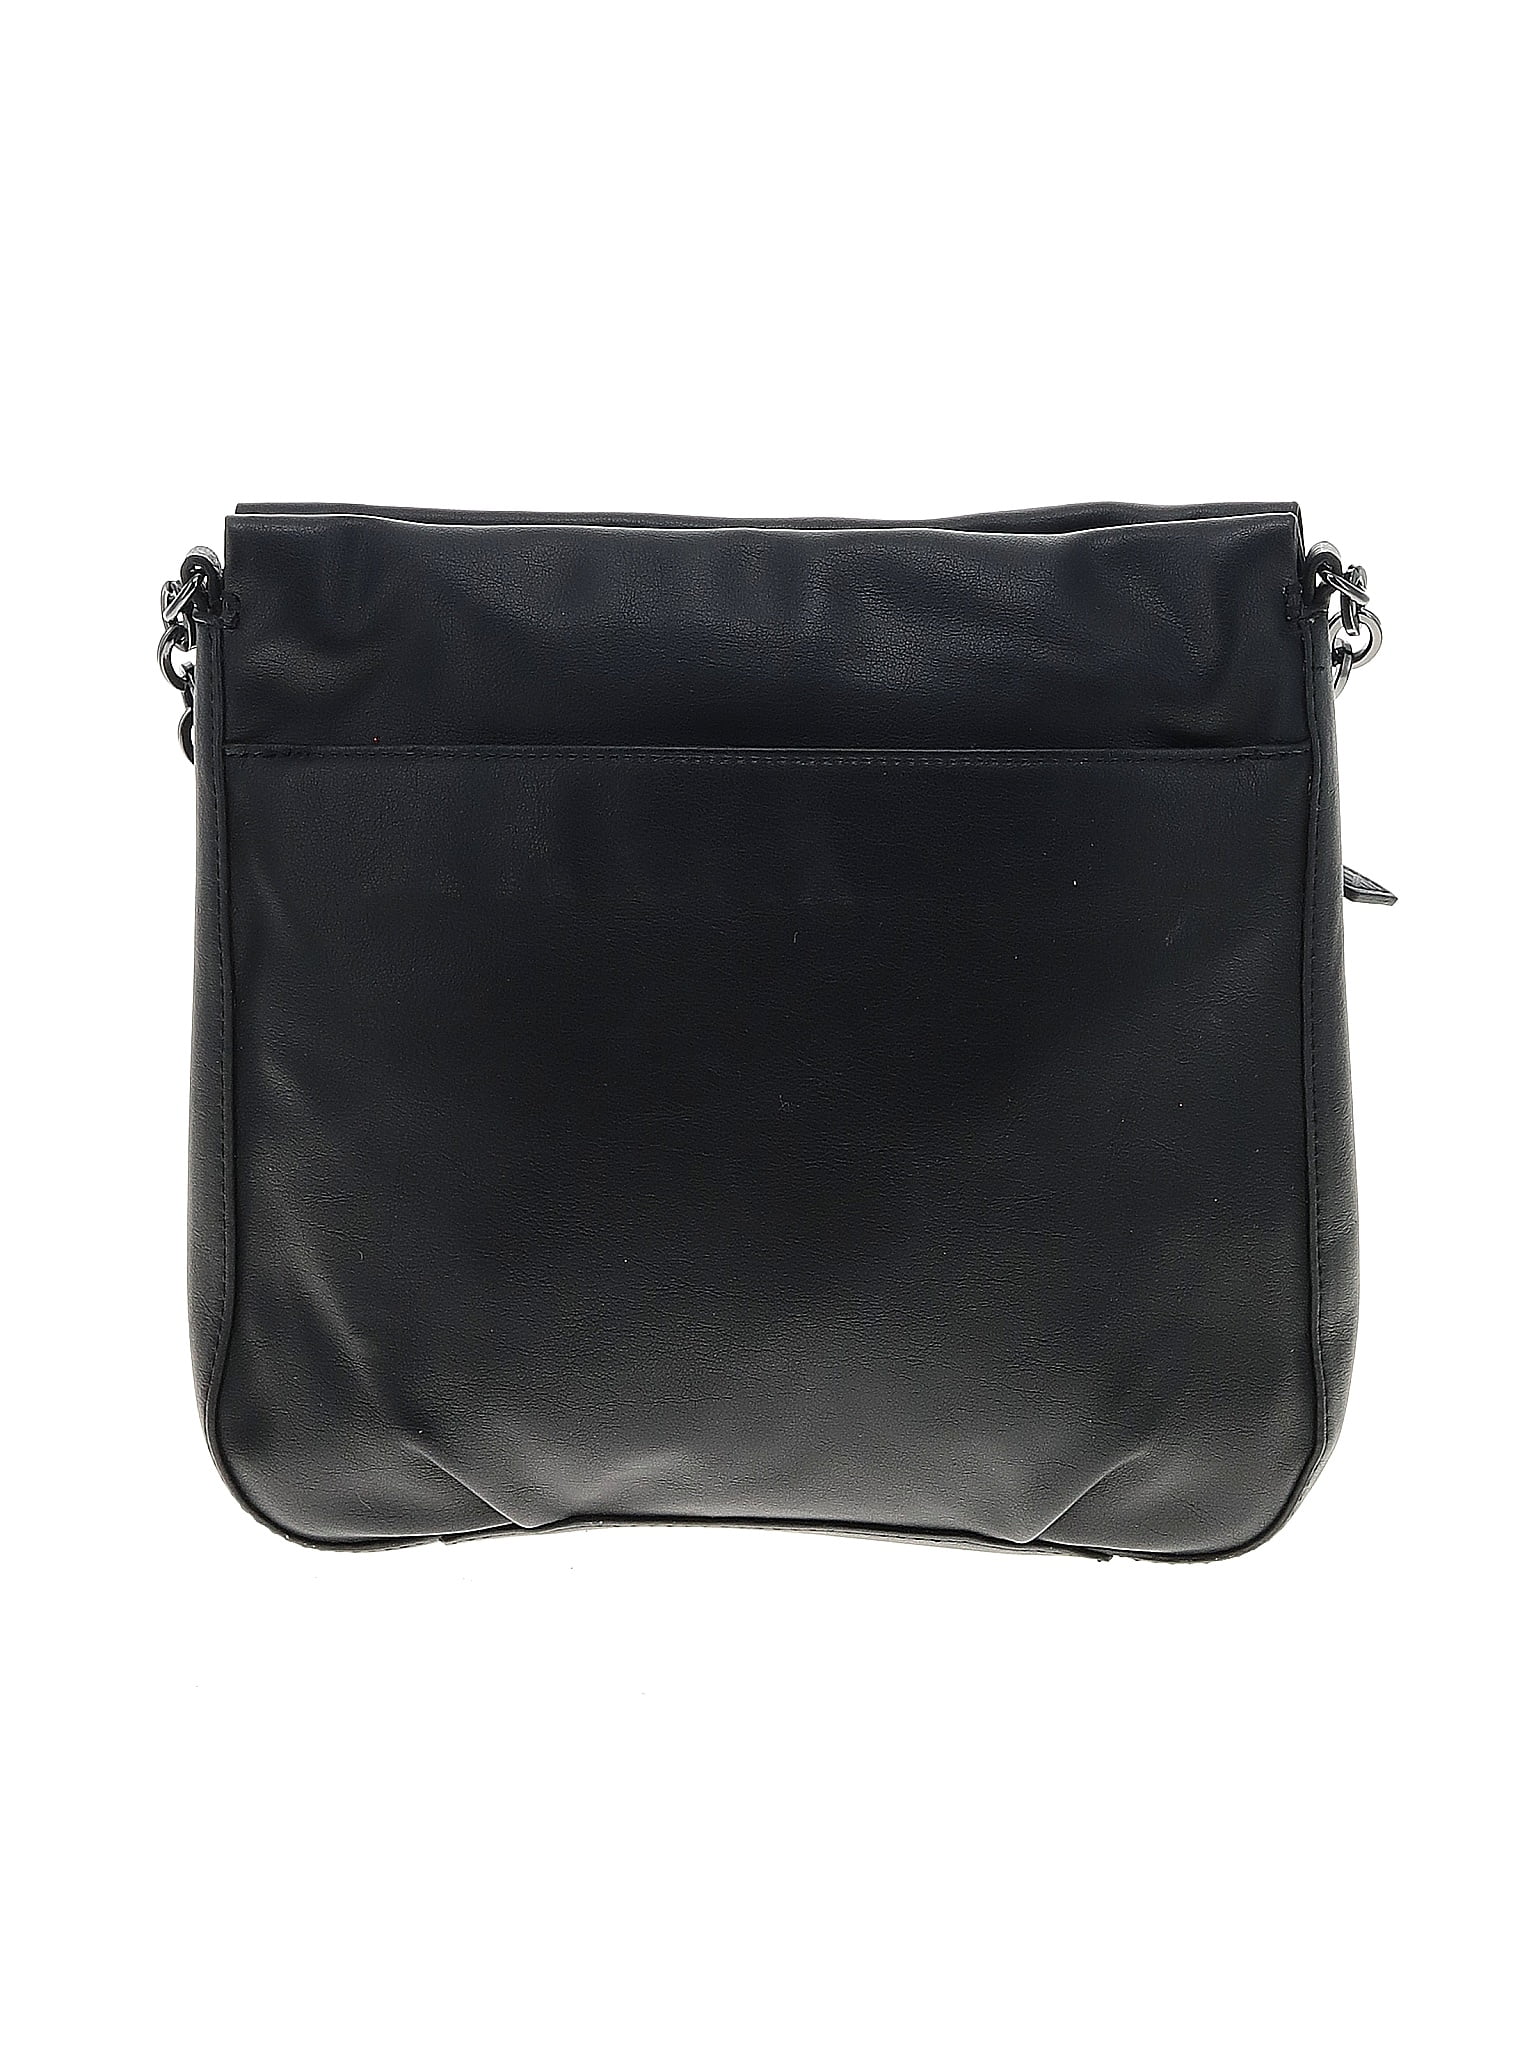 Simply Vera Vera Wang Graphic Solid Black Crossbody Bag One Size